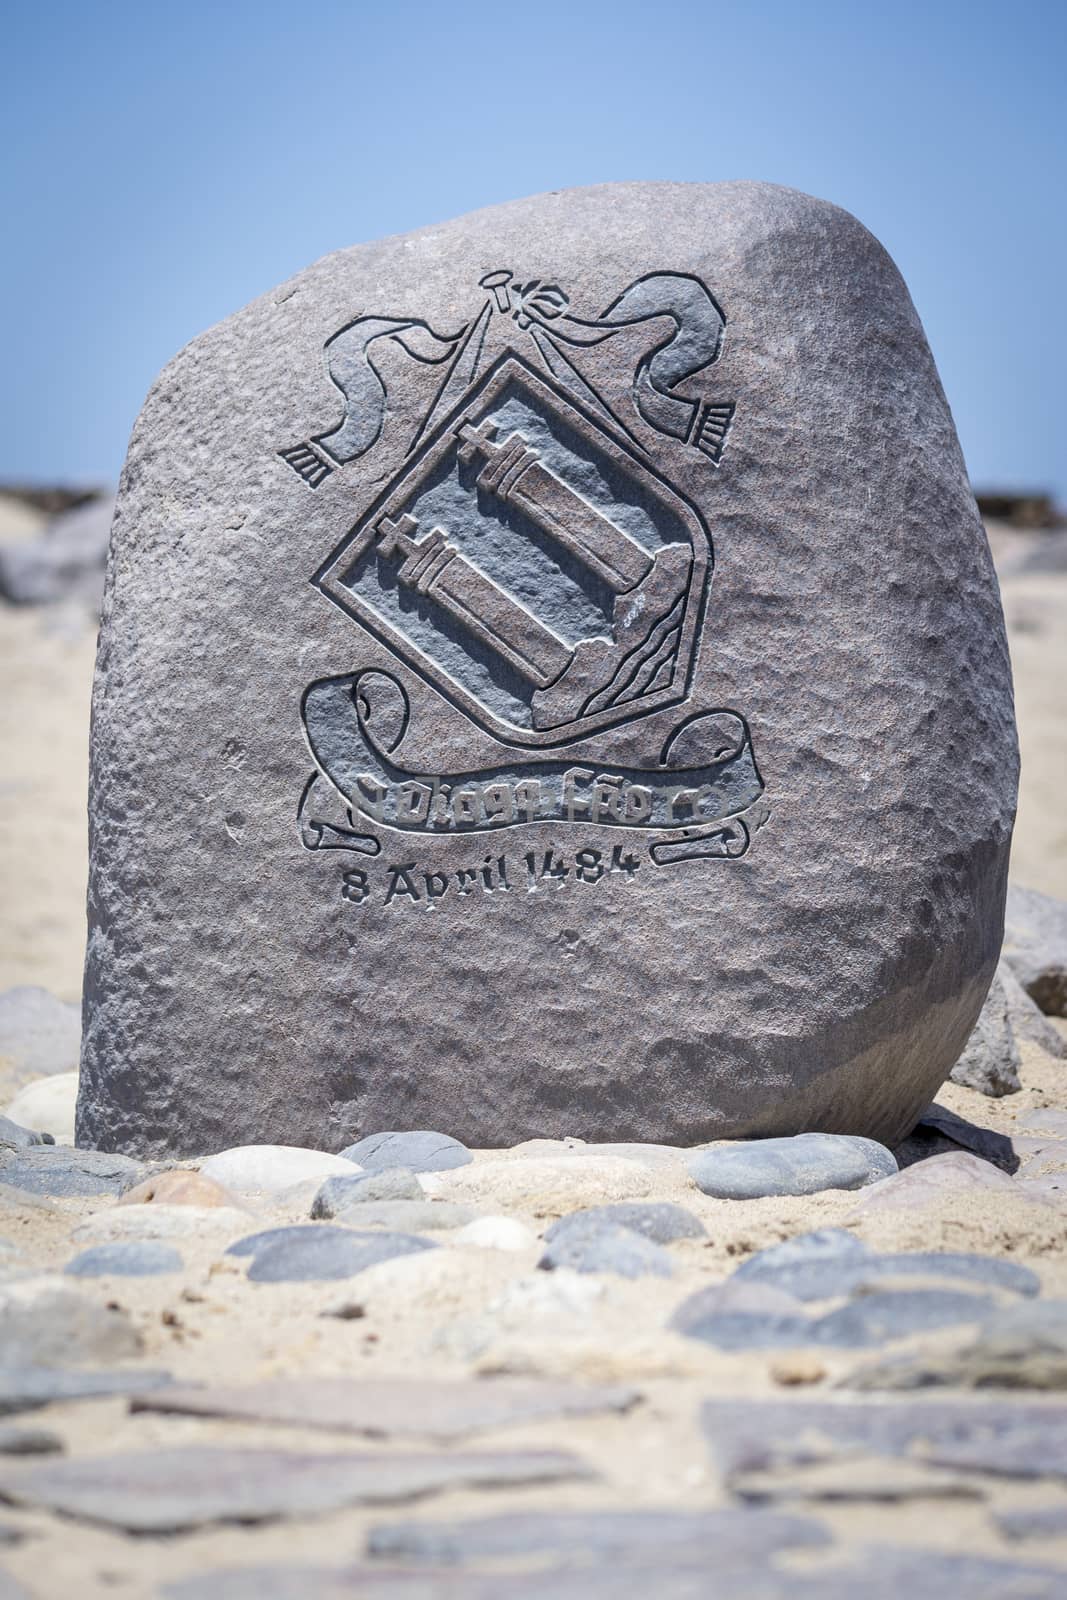 Diogo Cao Portugese explorer landmark stone at Cape Cross or Cabo da Cruz in Namibia by kb79